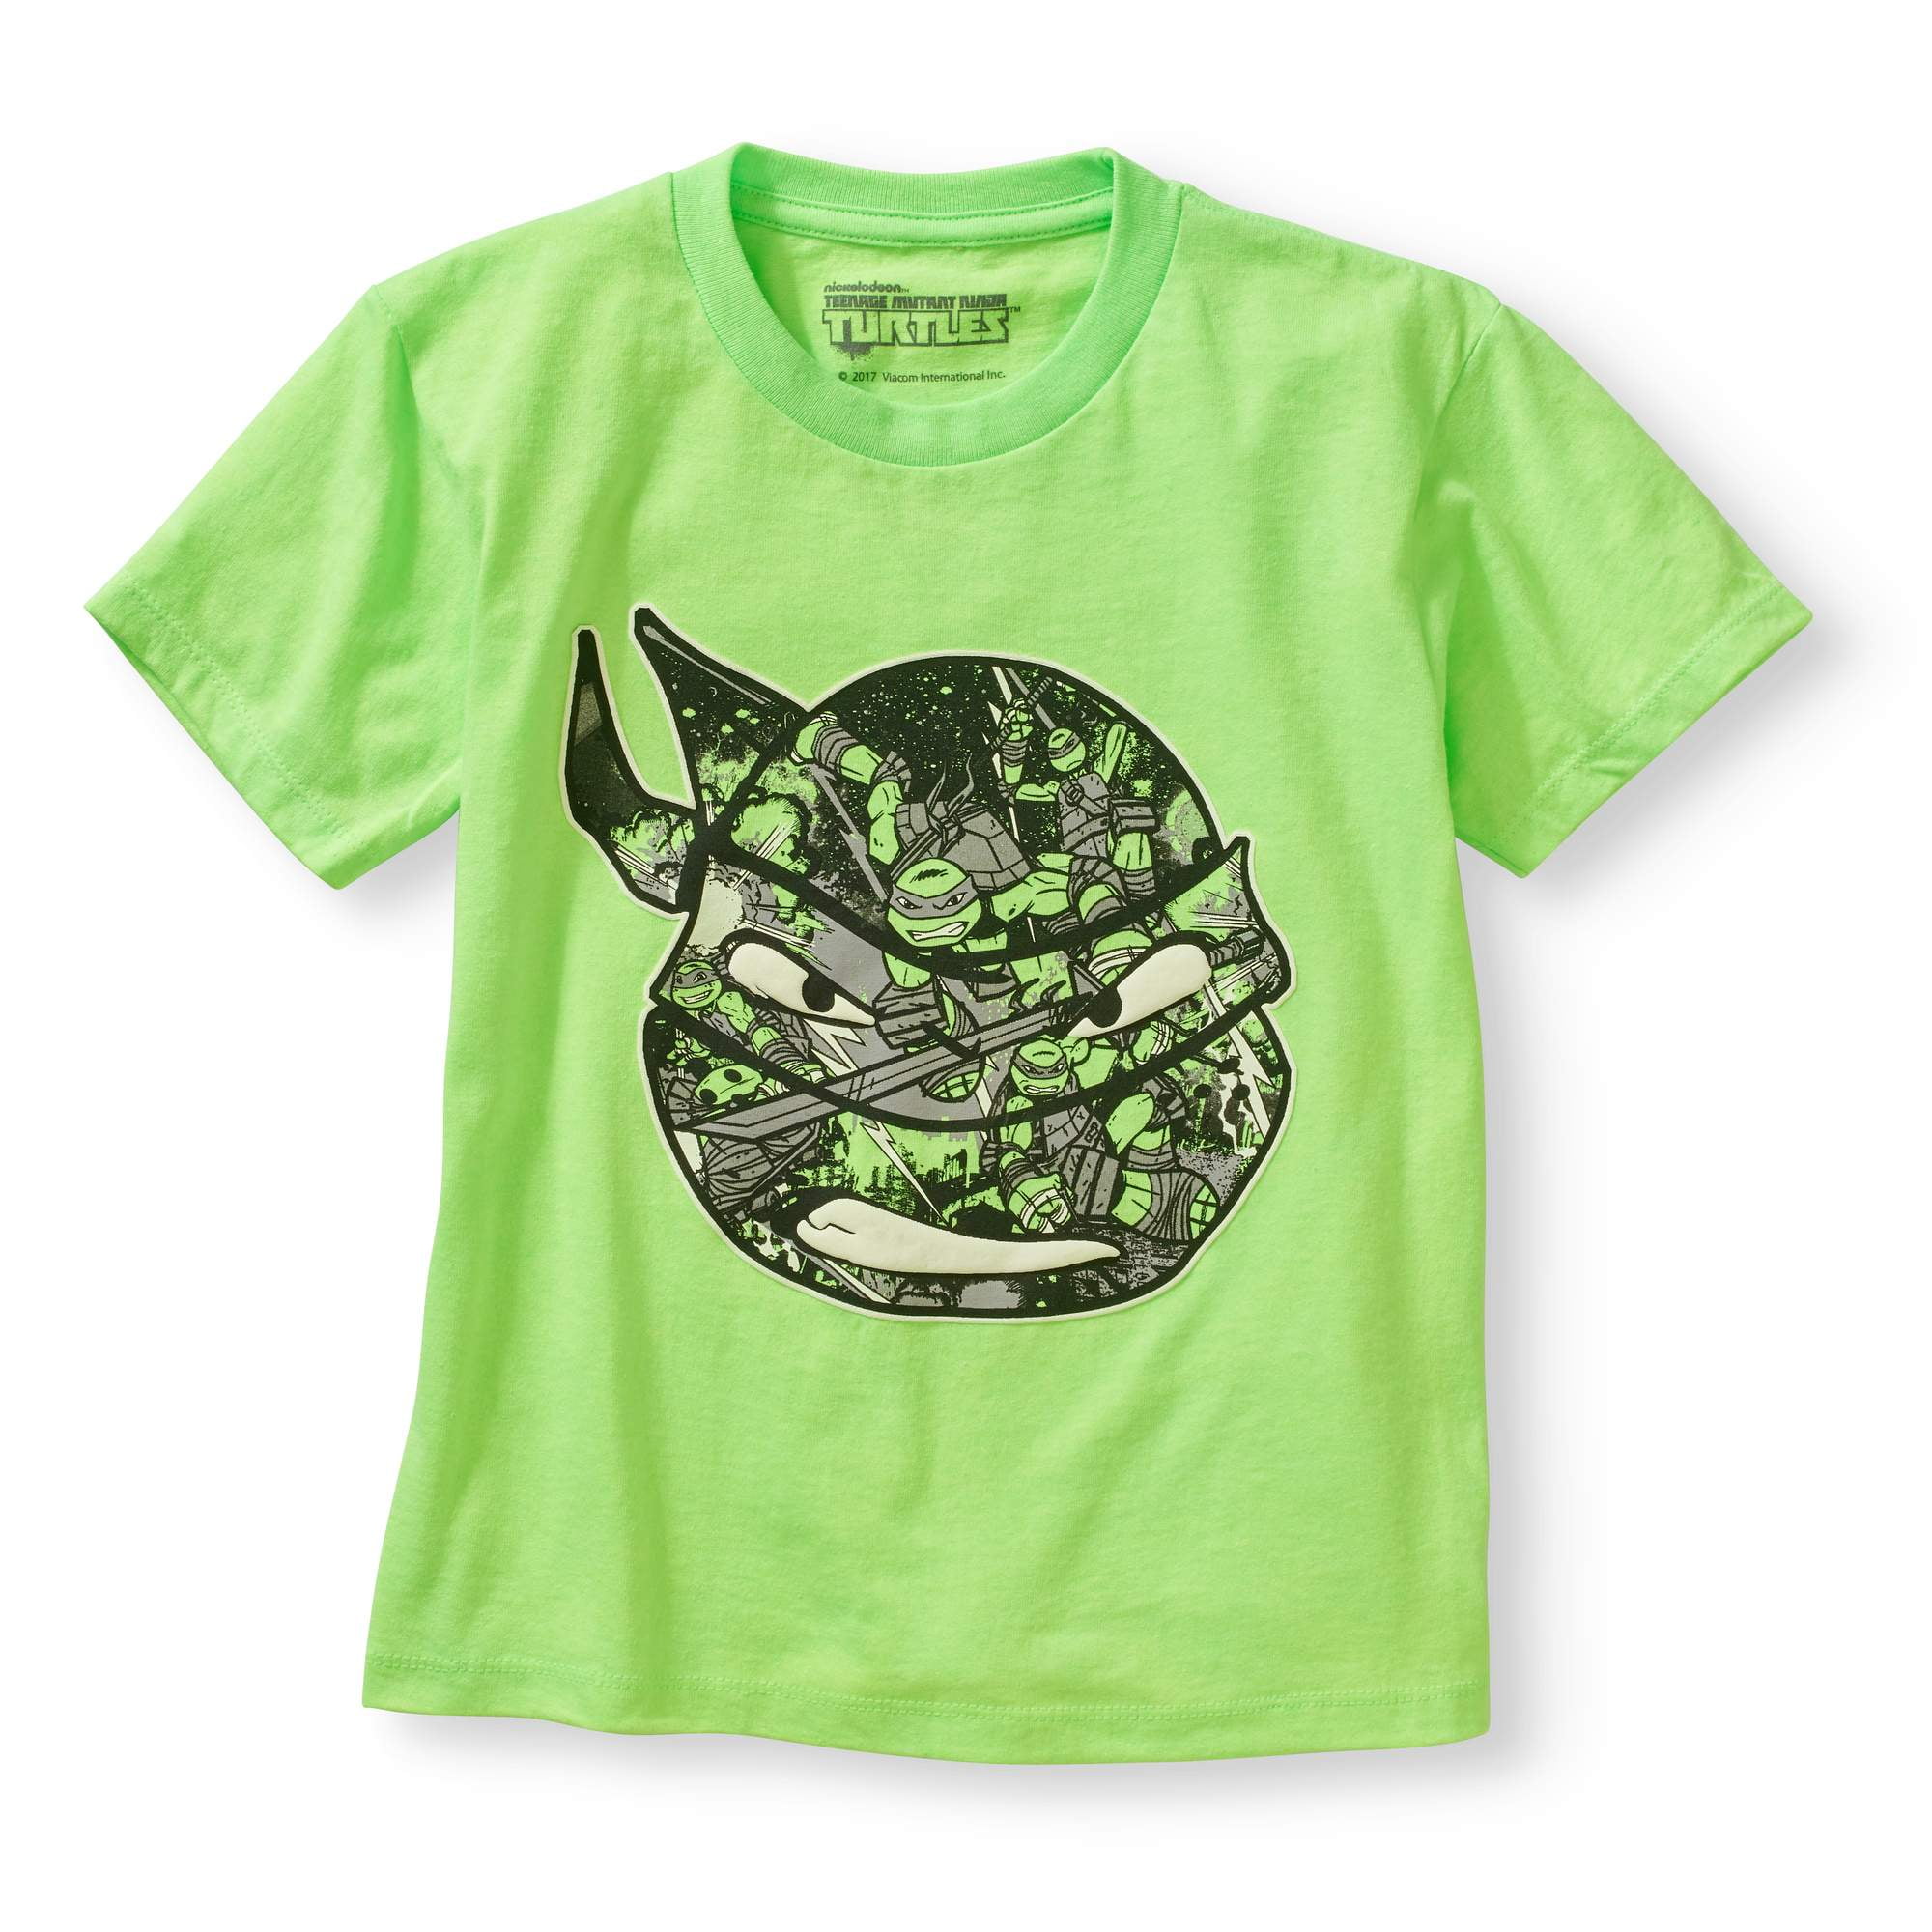 Nick Jr Teenage Mutant Ninja Turtles Yellow Boys Shirt